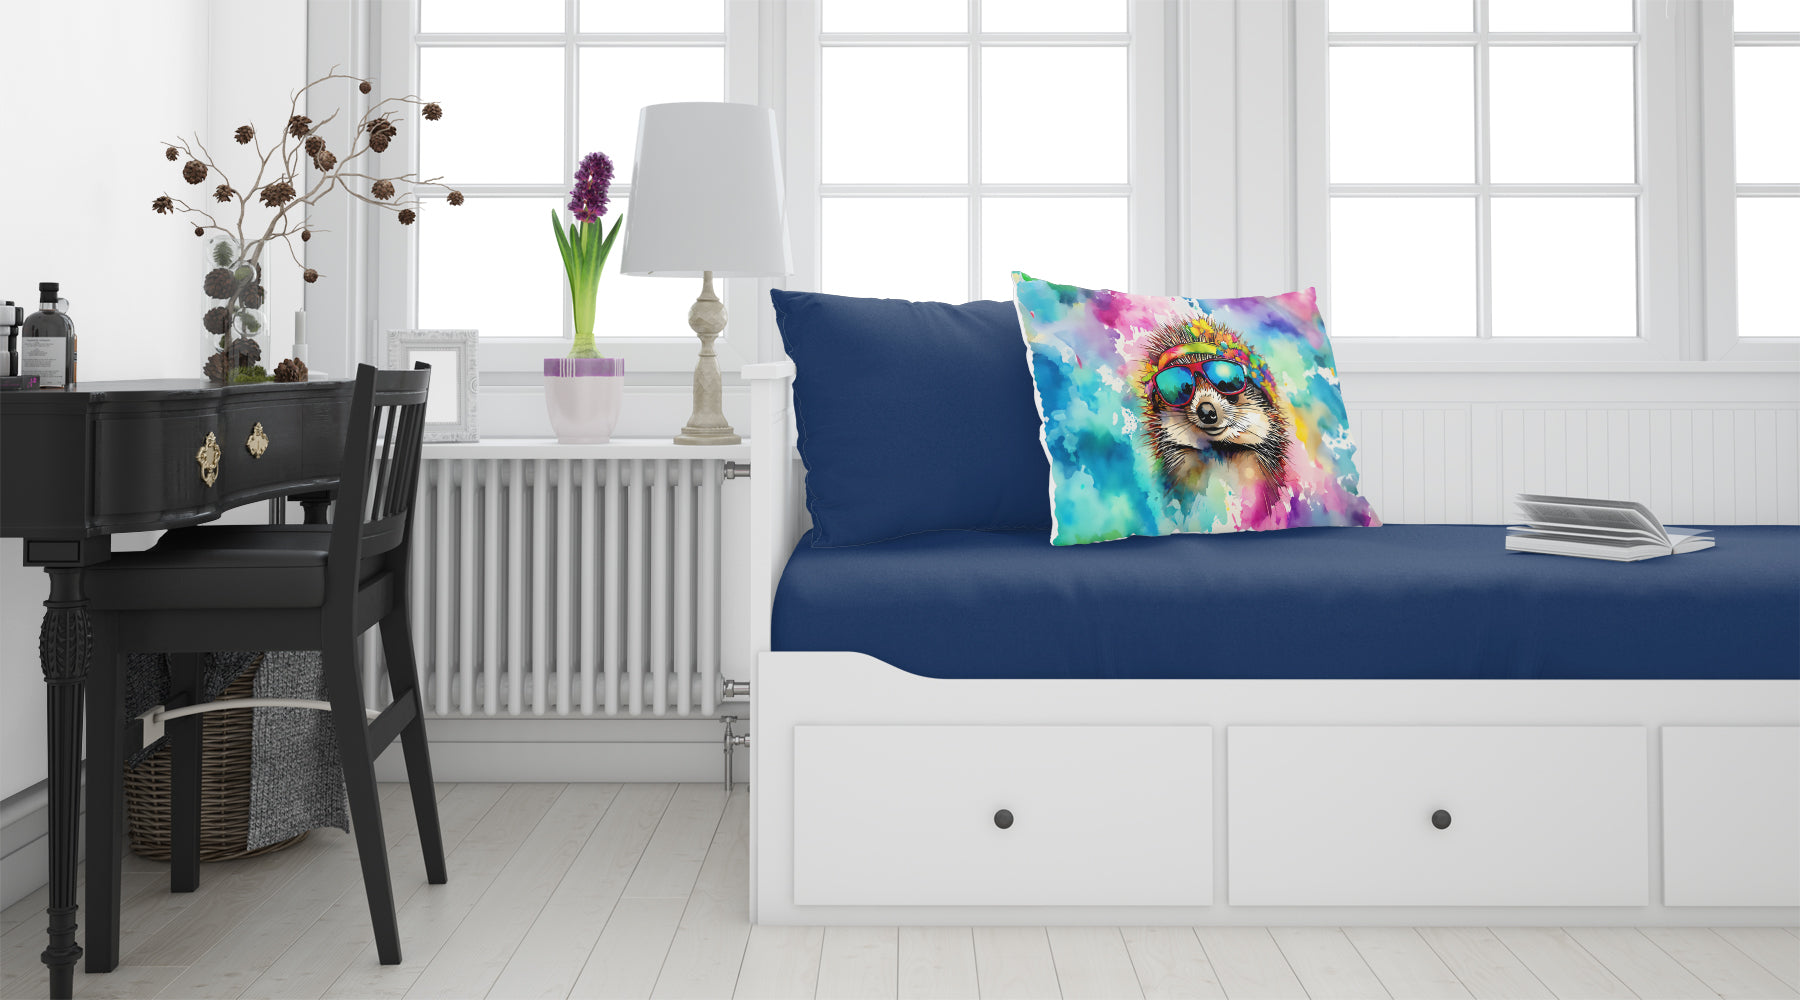 Buy this Hippie Animal Hedgehog Standard Pillowcase